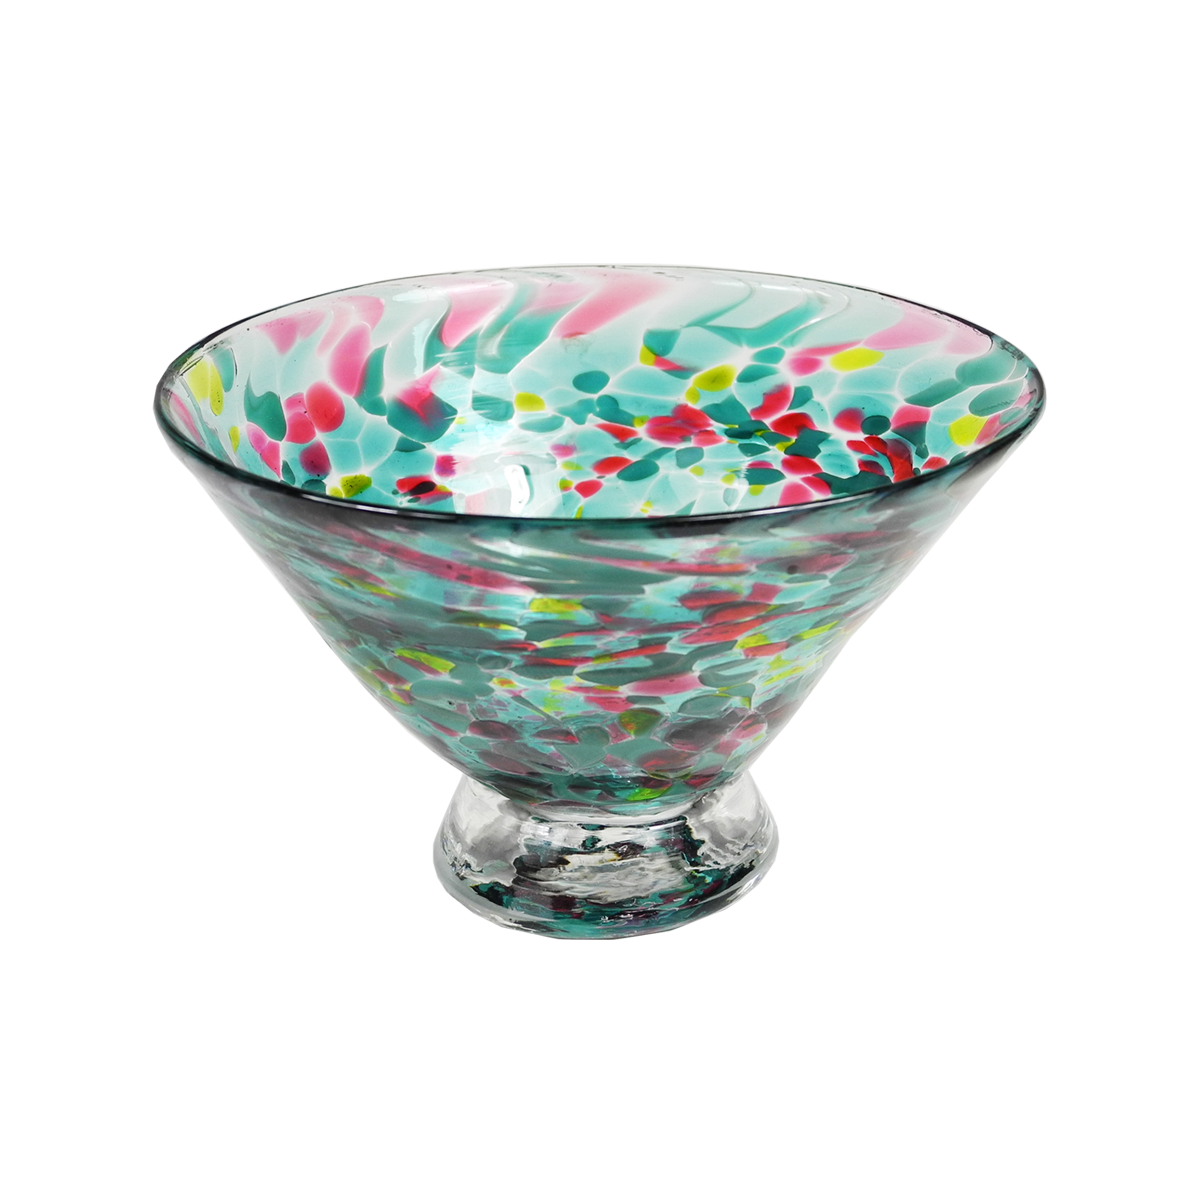 Speckle Dessert Cups - Glass Art - Kingston Glass Studio - Blown Glass - Glass Blowing